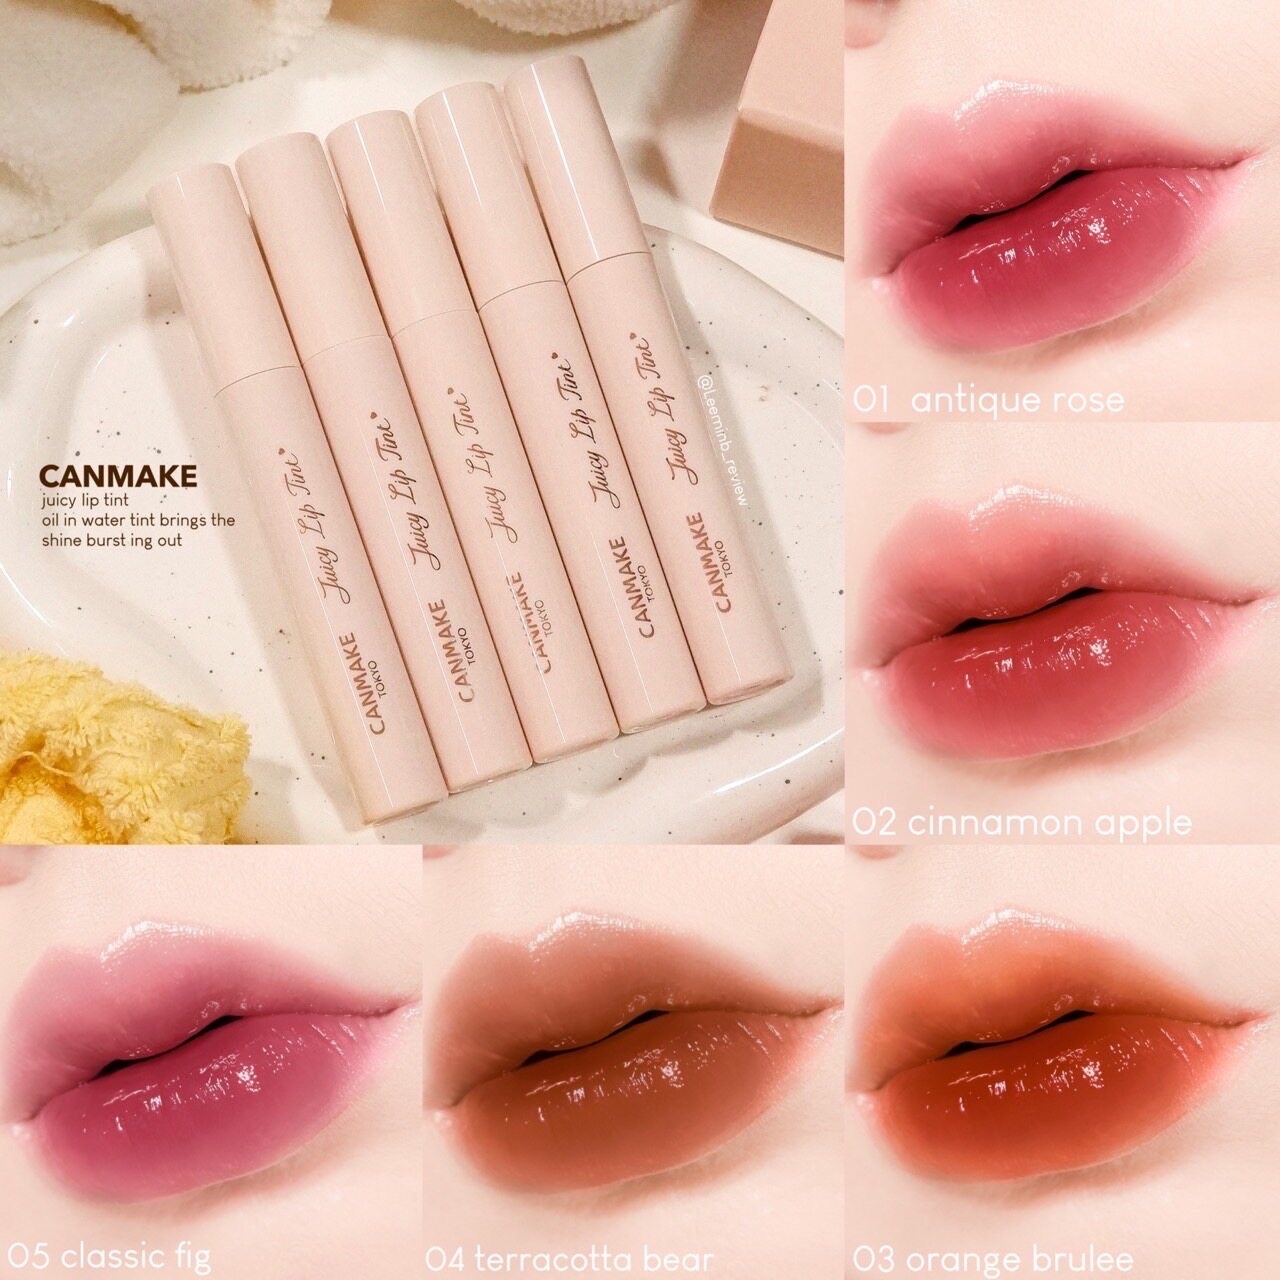 Canmake - Juicy Lip Tint